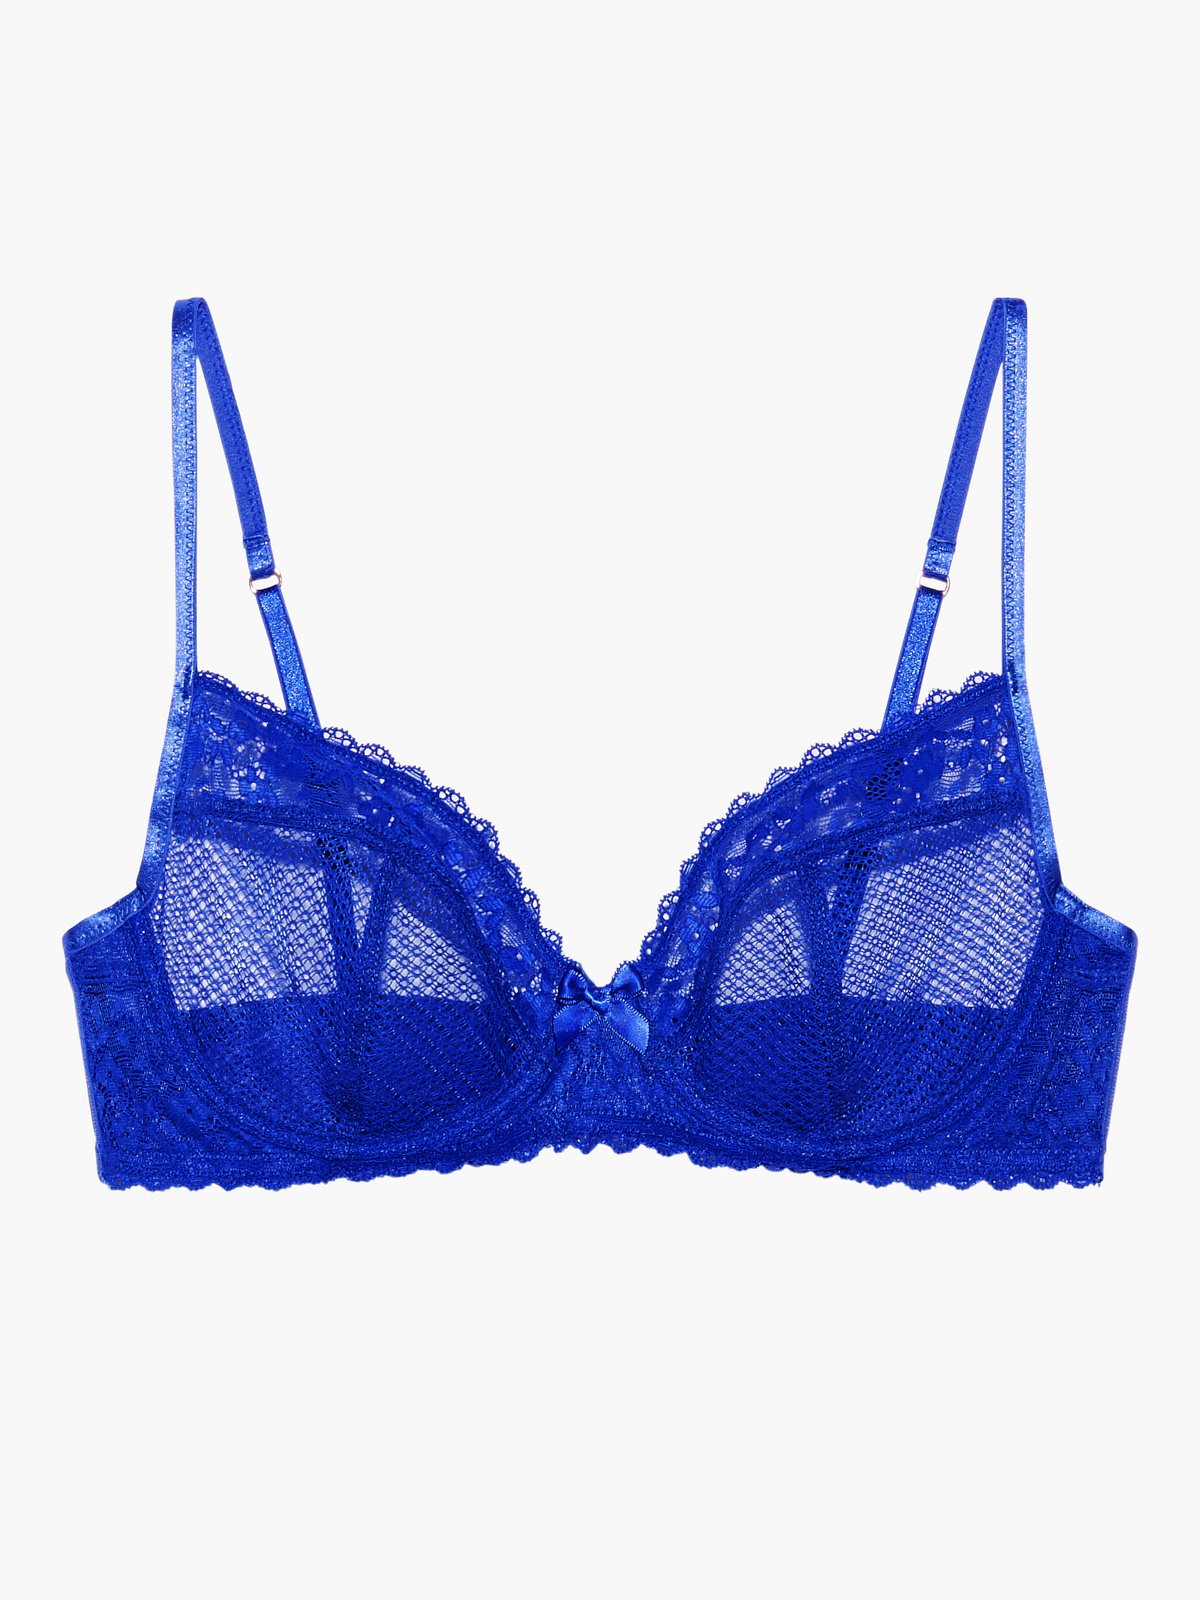 nwt free people lace colbalt blue bra 32D unlined - Depop